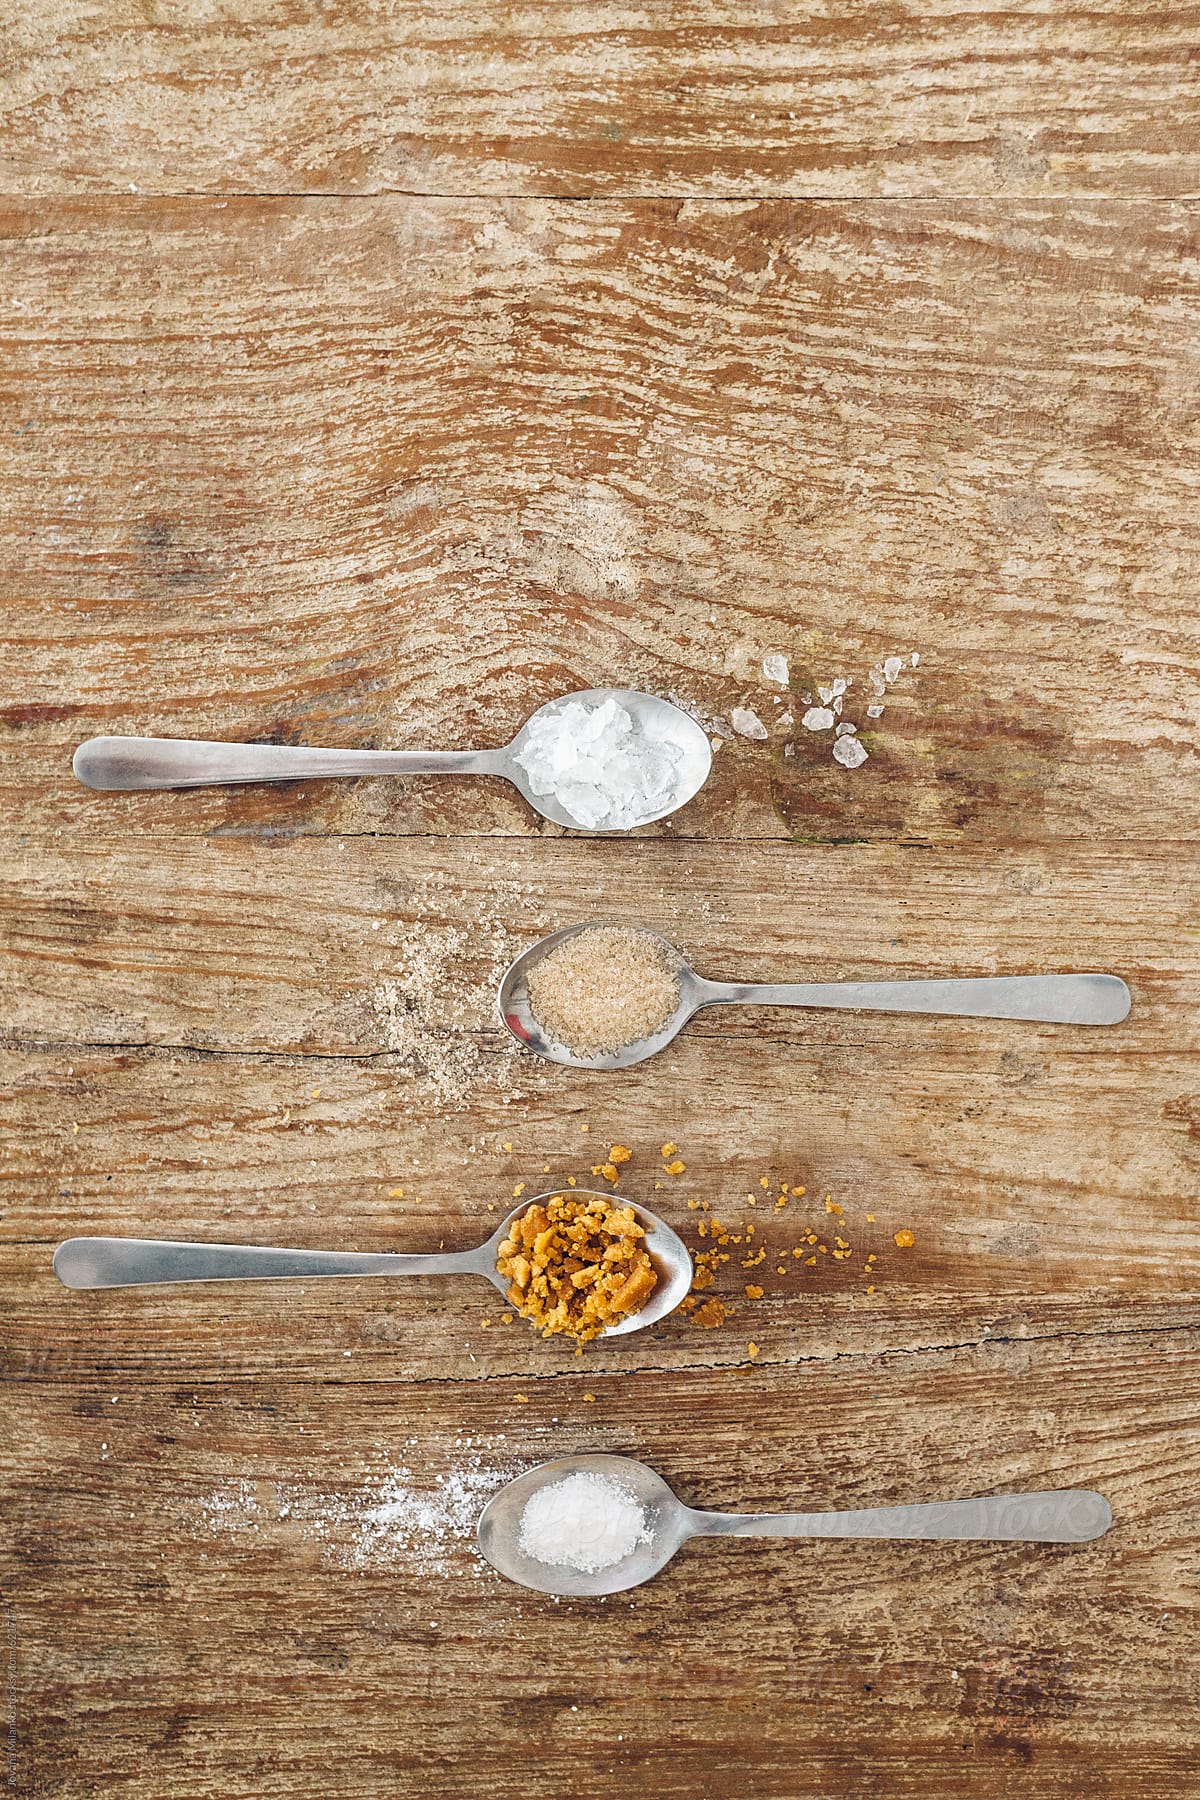 Teaspoons holding four kinds of sugar